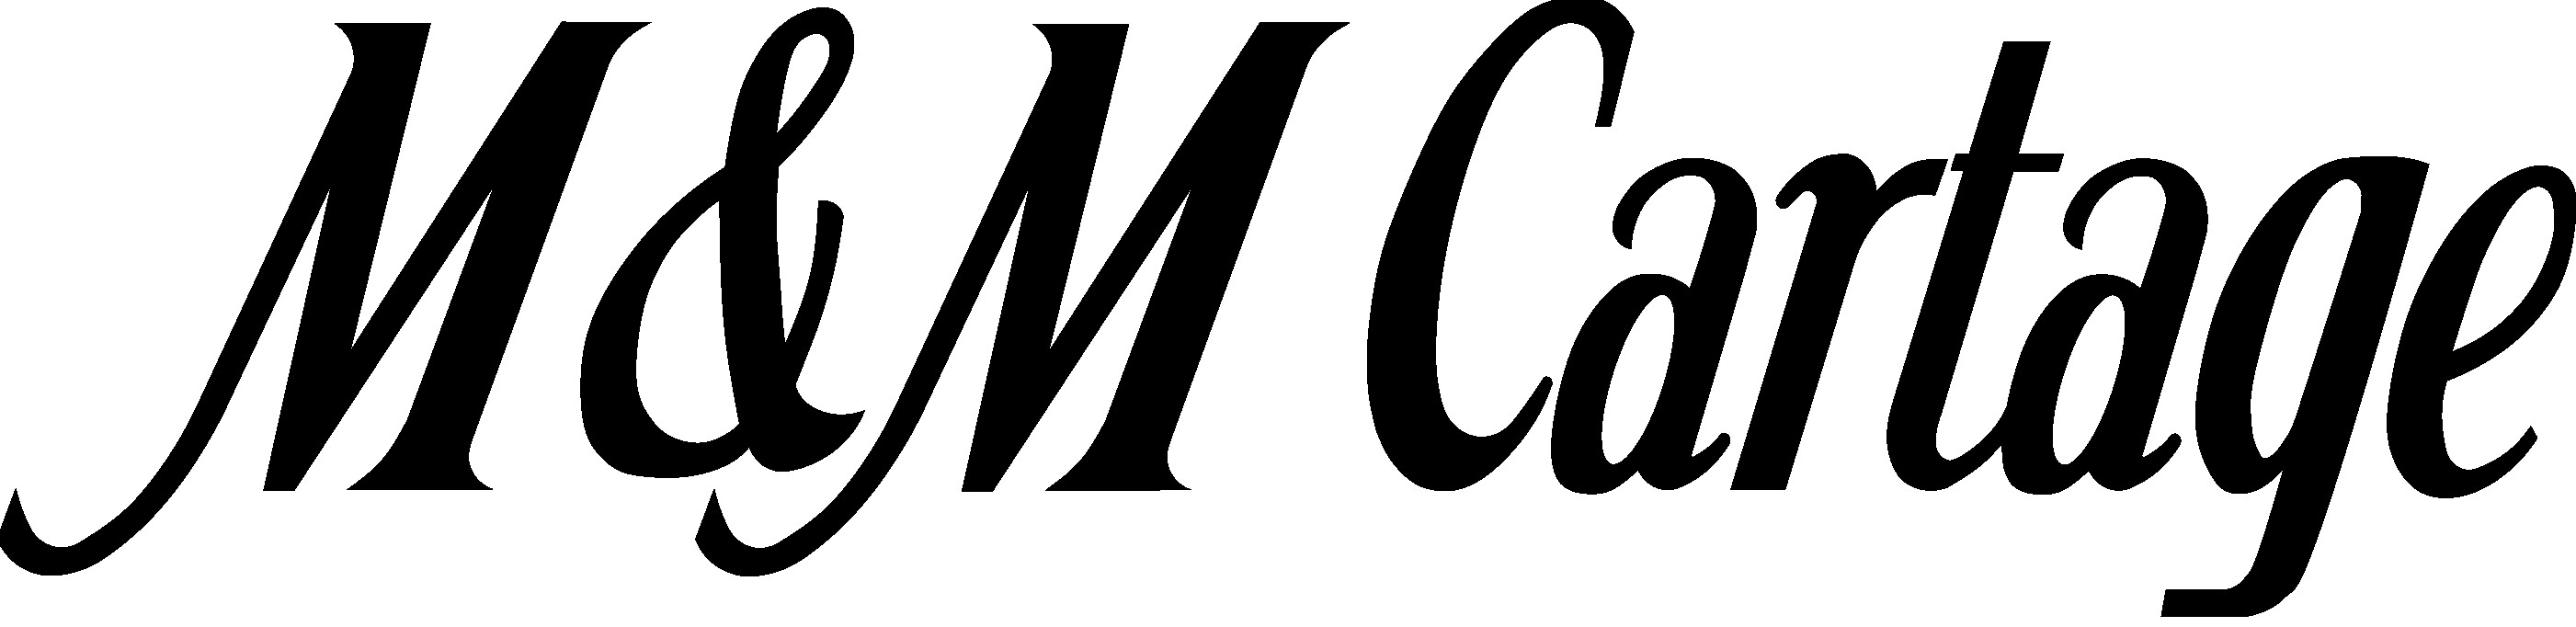 M&M Cartage Co., Inc. logo